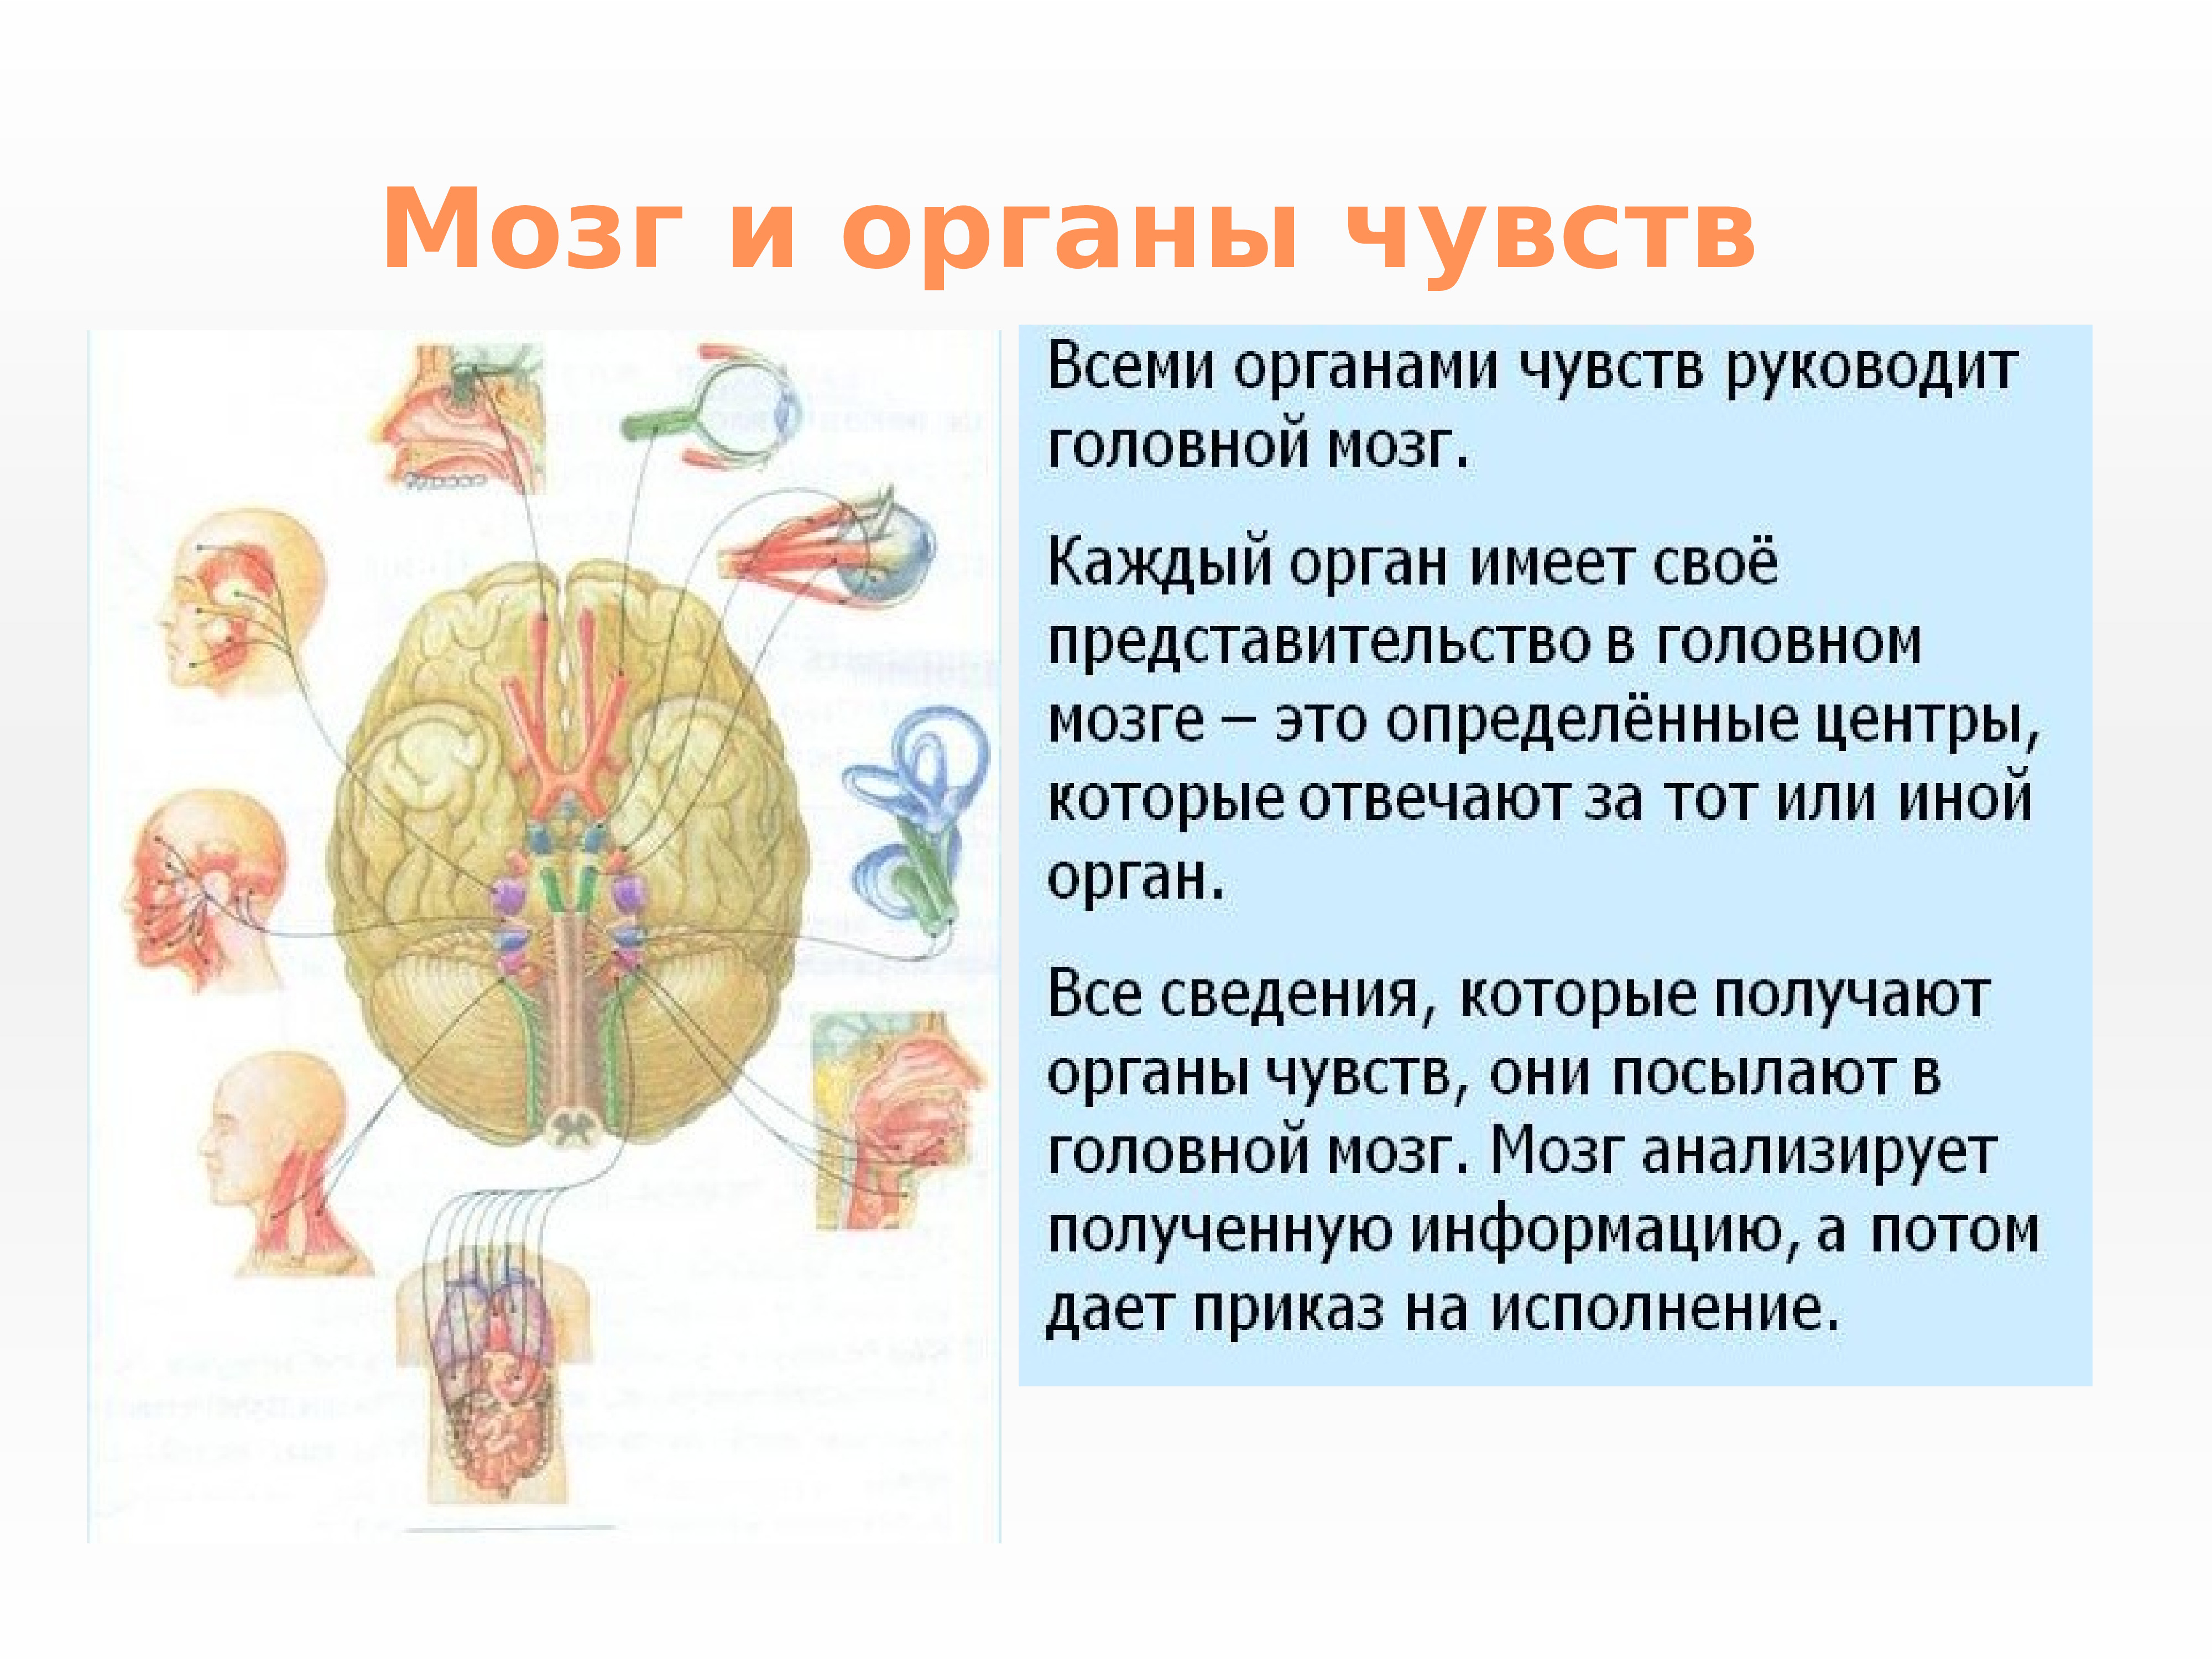 Мозг главный орган